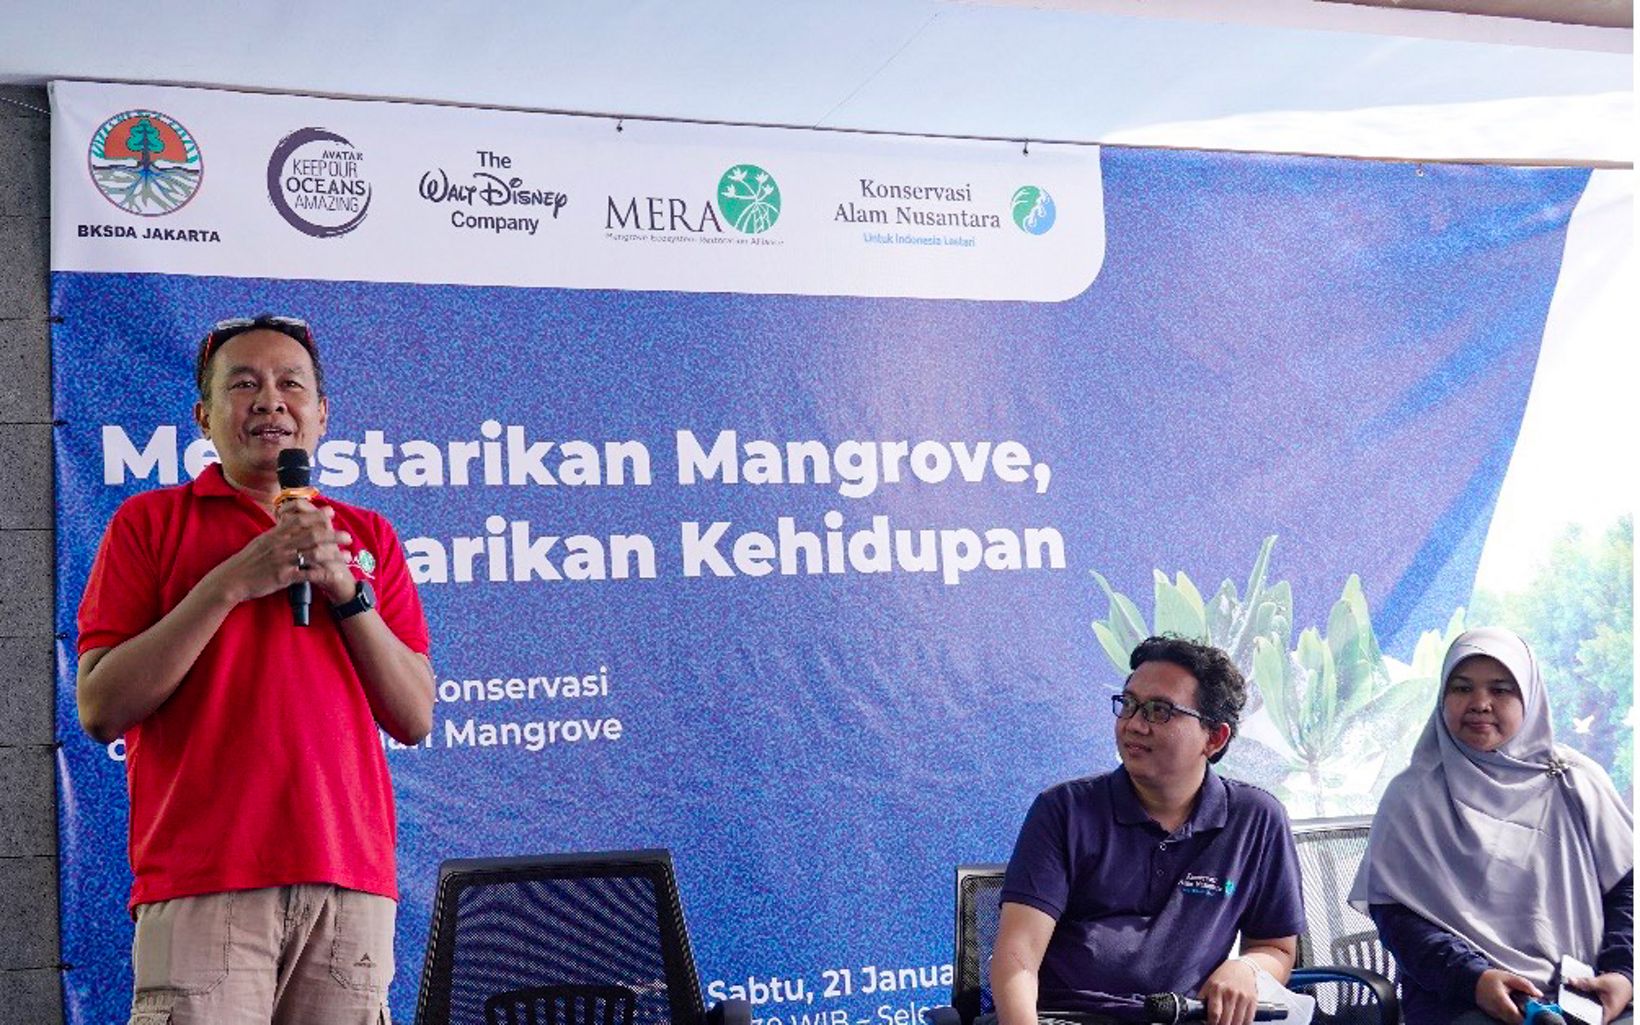 
                
                  Photo Caption Conservation of Natural Resources Jakarta (BKSDA) together with Yayasan Konservasi Alam Nusantara (YKAN) and Disney planted mangroves and a Conservation Chat (Ngonser) at the Muara Angke Wildlife Reserve (SM) with the theme "Protect Mangroves, Preserve Life", on Saturday (21/1).
                  © Nugroho Arif Prabowo/YKAN
                
              